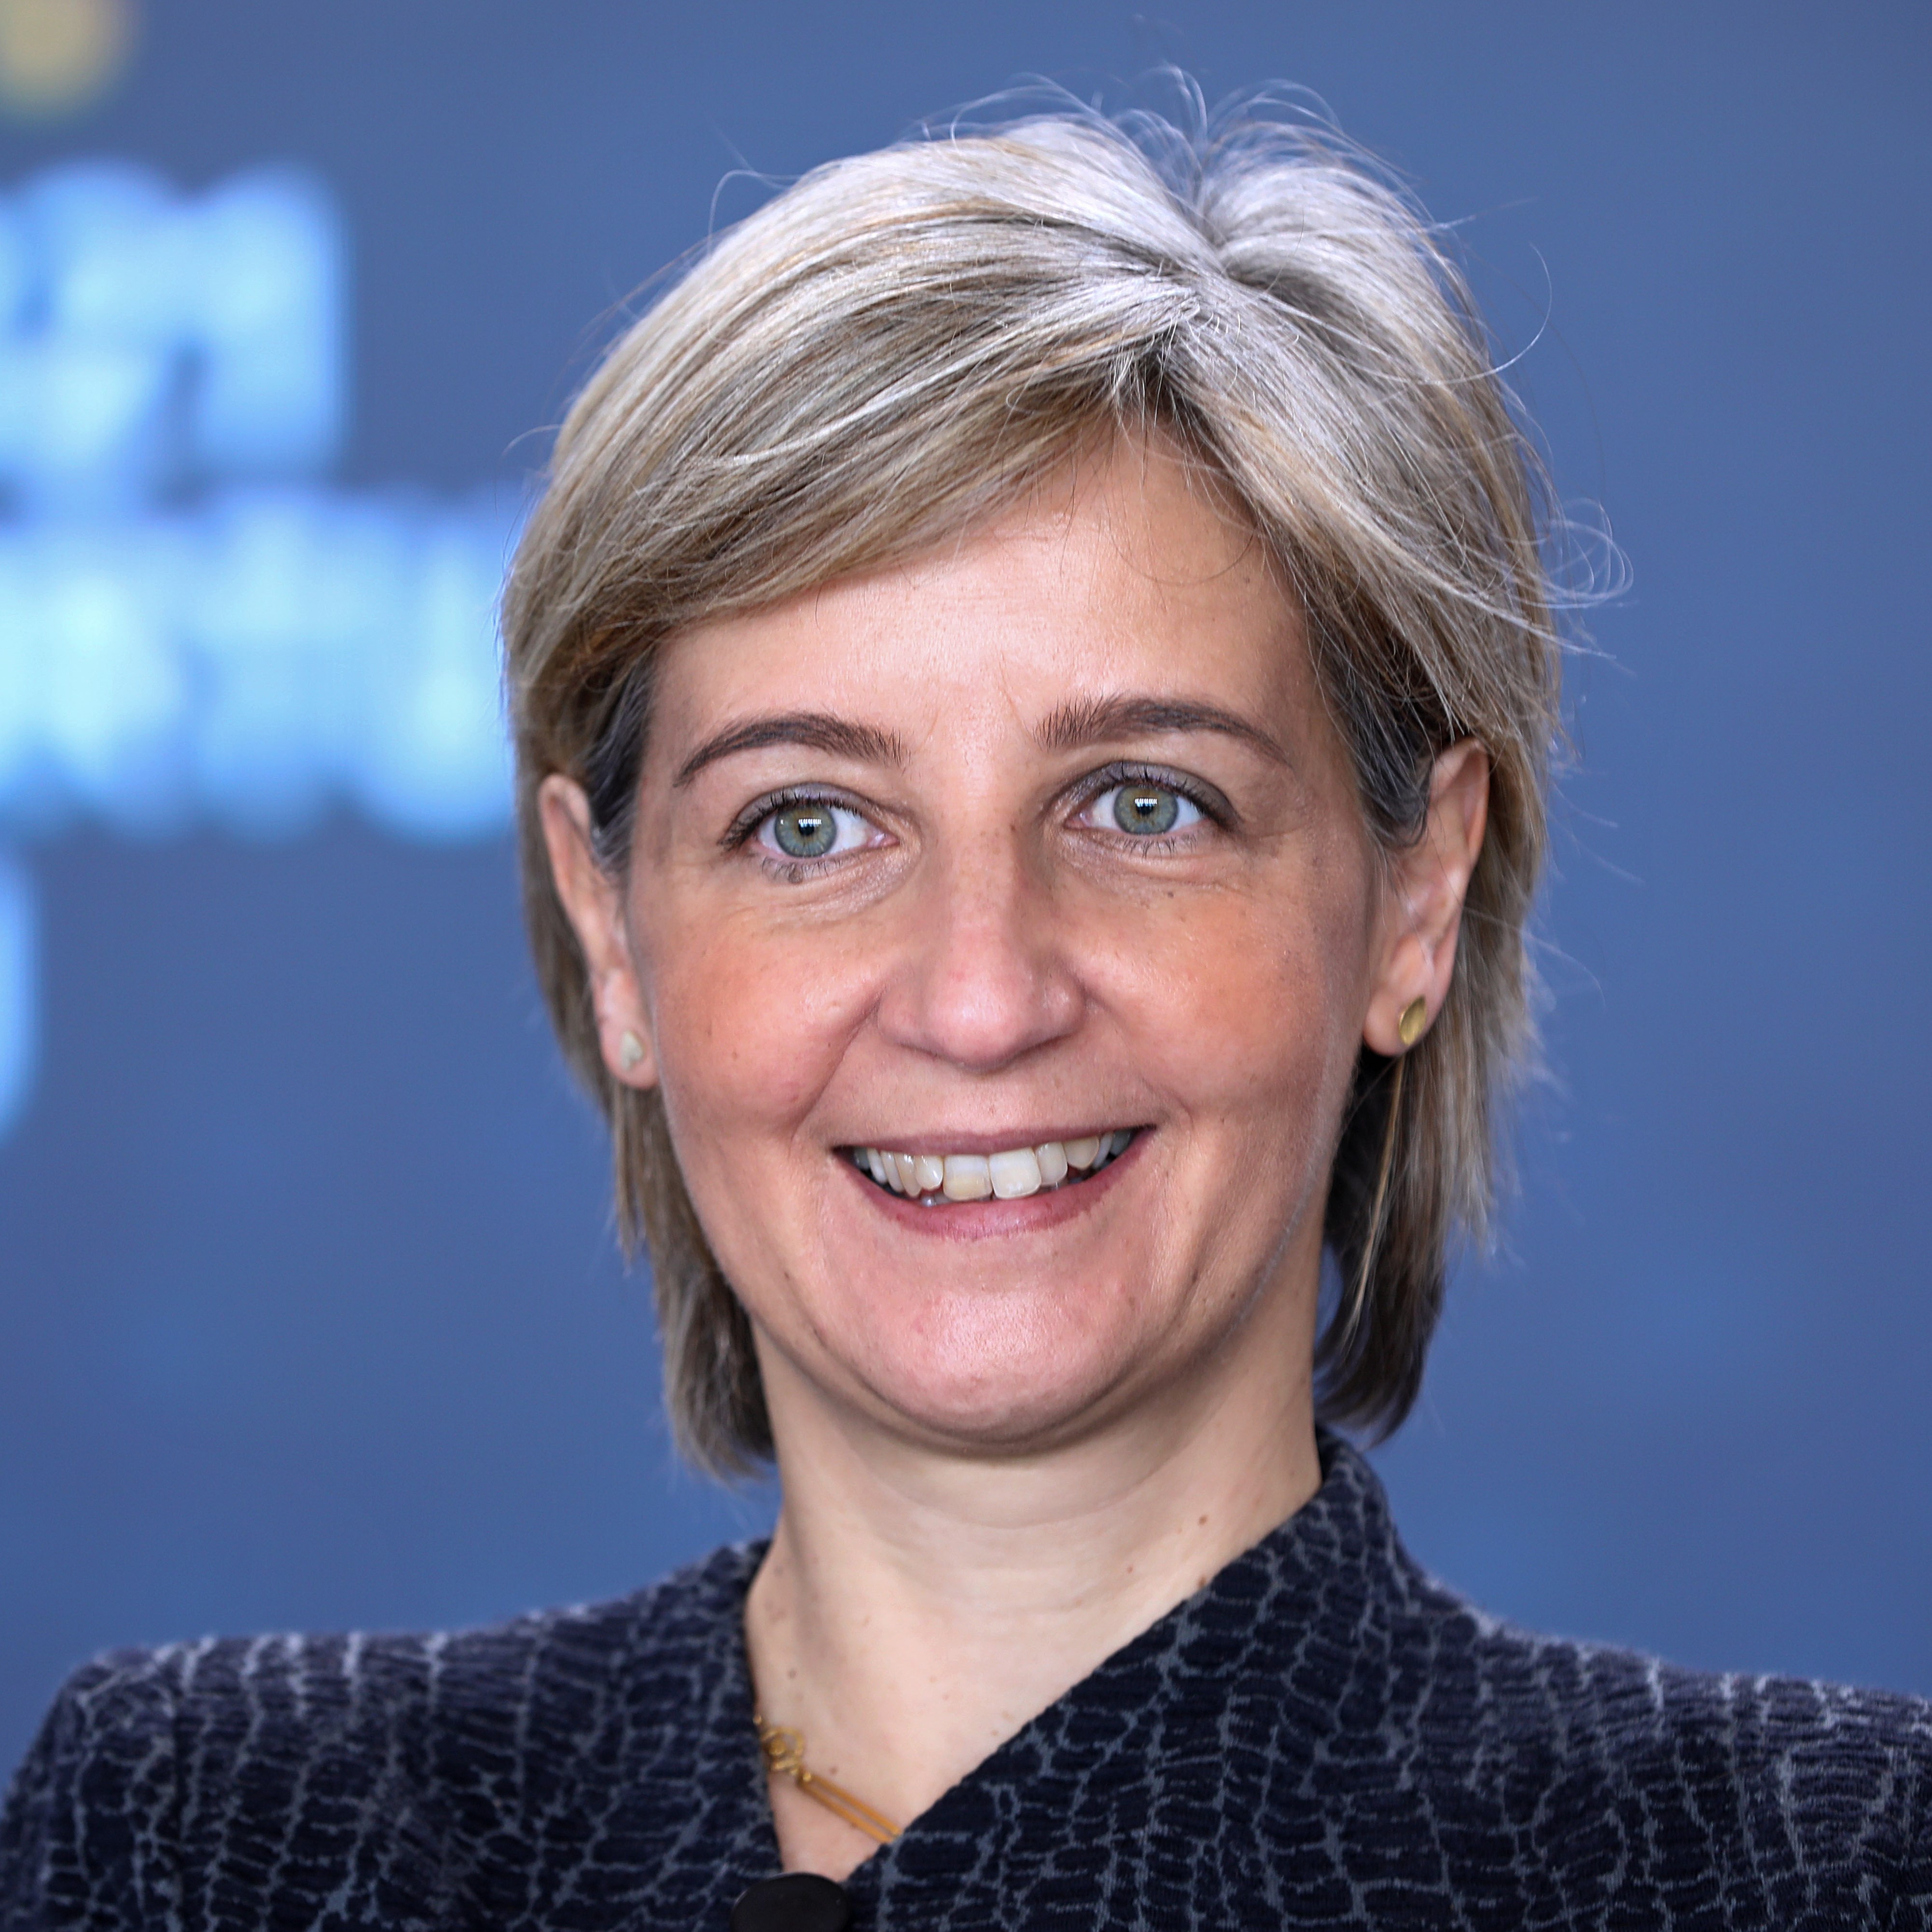 Marta Temido, Minister for Health of Portugal